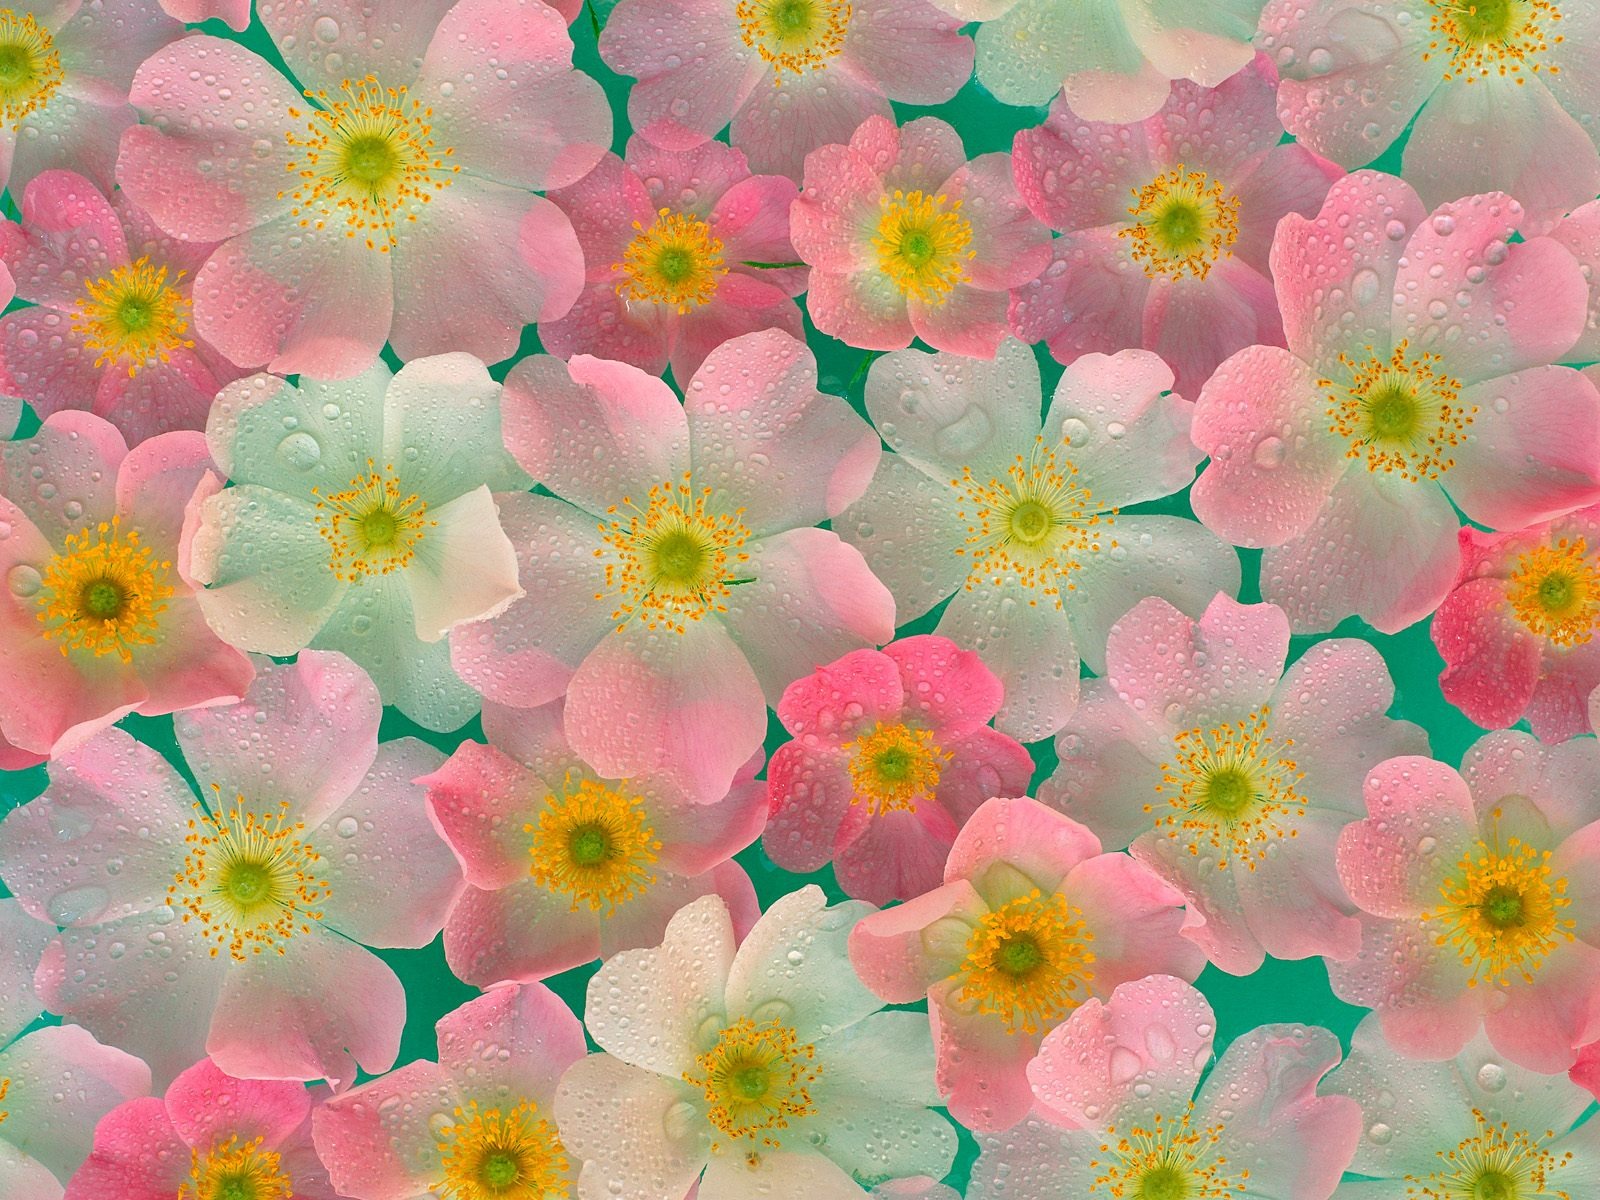 Flowers close-up (19) #9 - 1600x1200